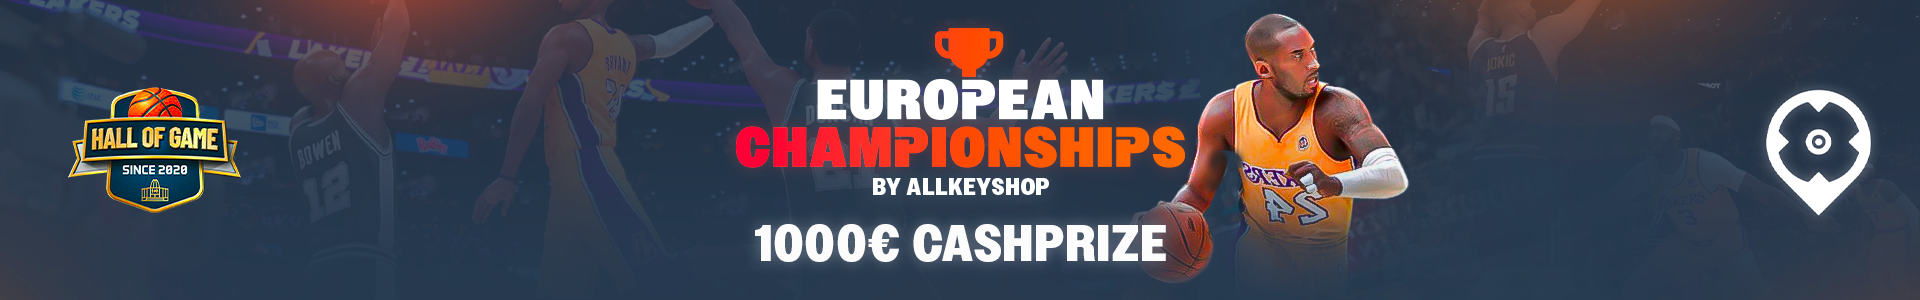 European Championships by Allkeyshop